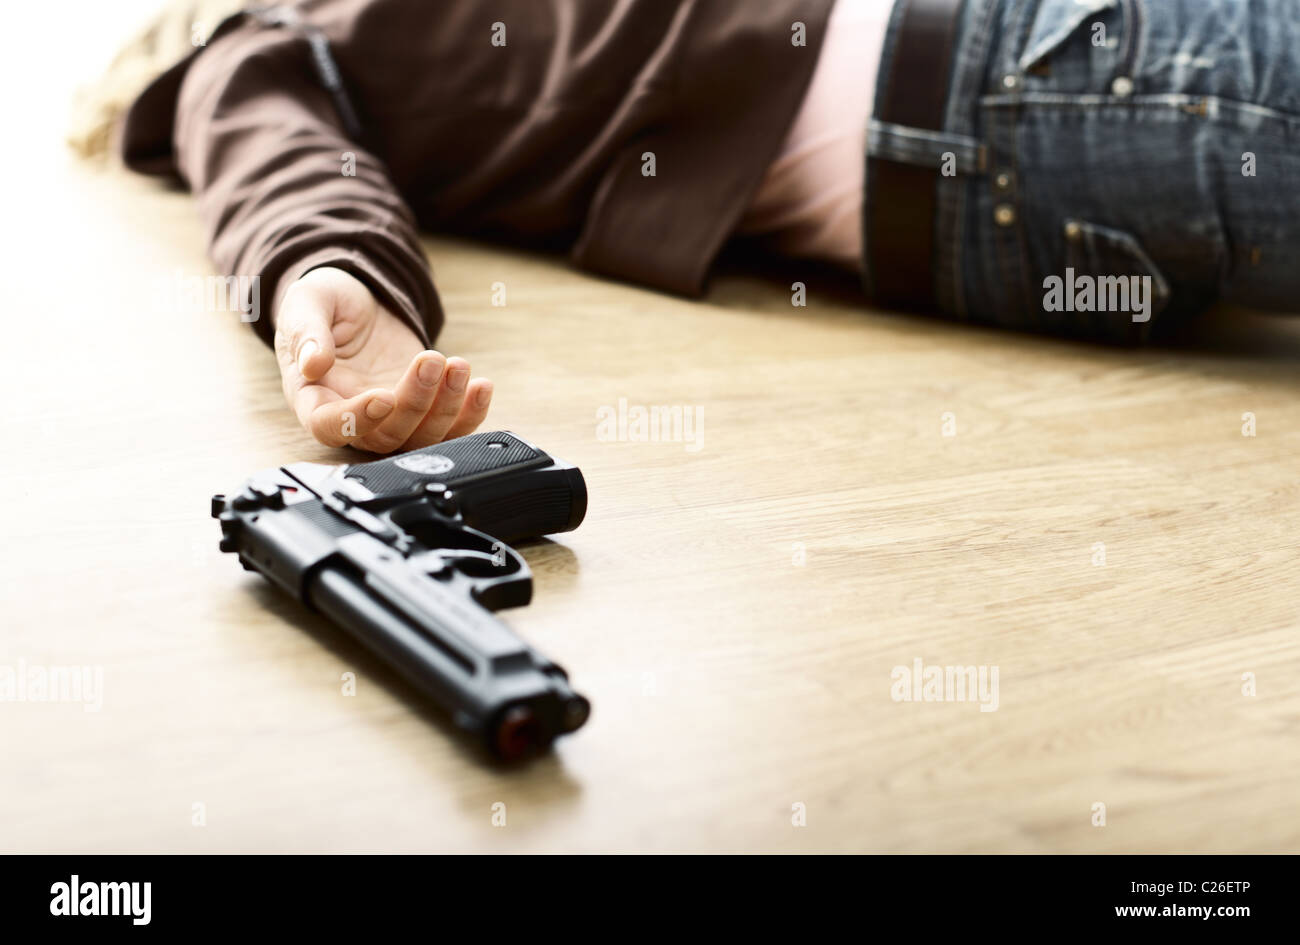 crime scene, dead body on floor and pistol, selective focus image Stock Photo